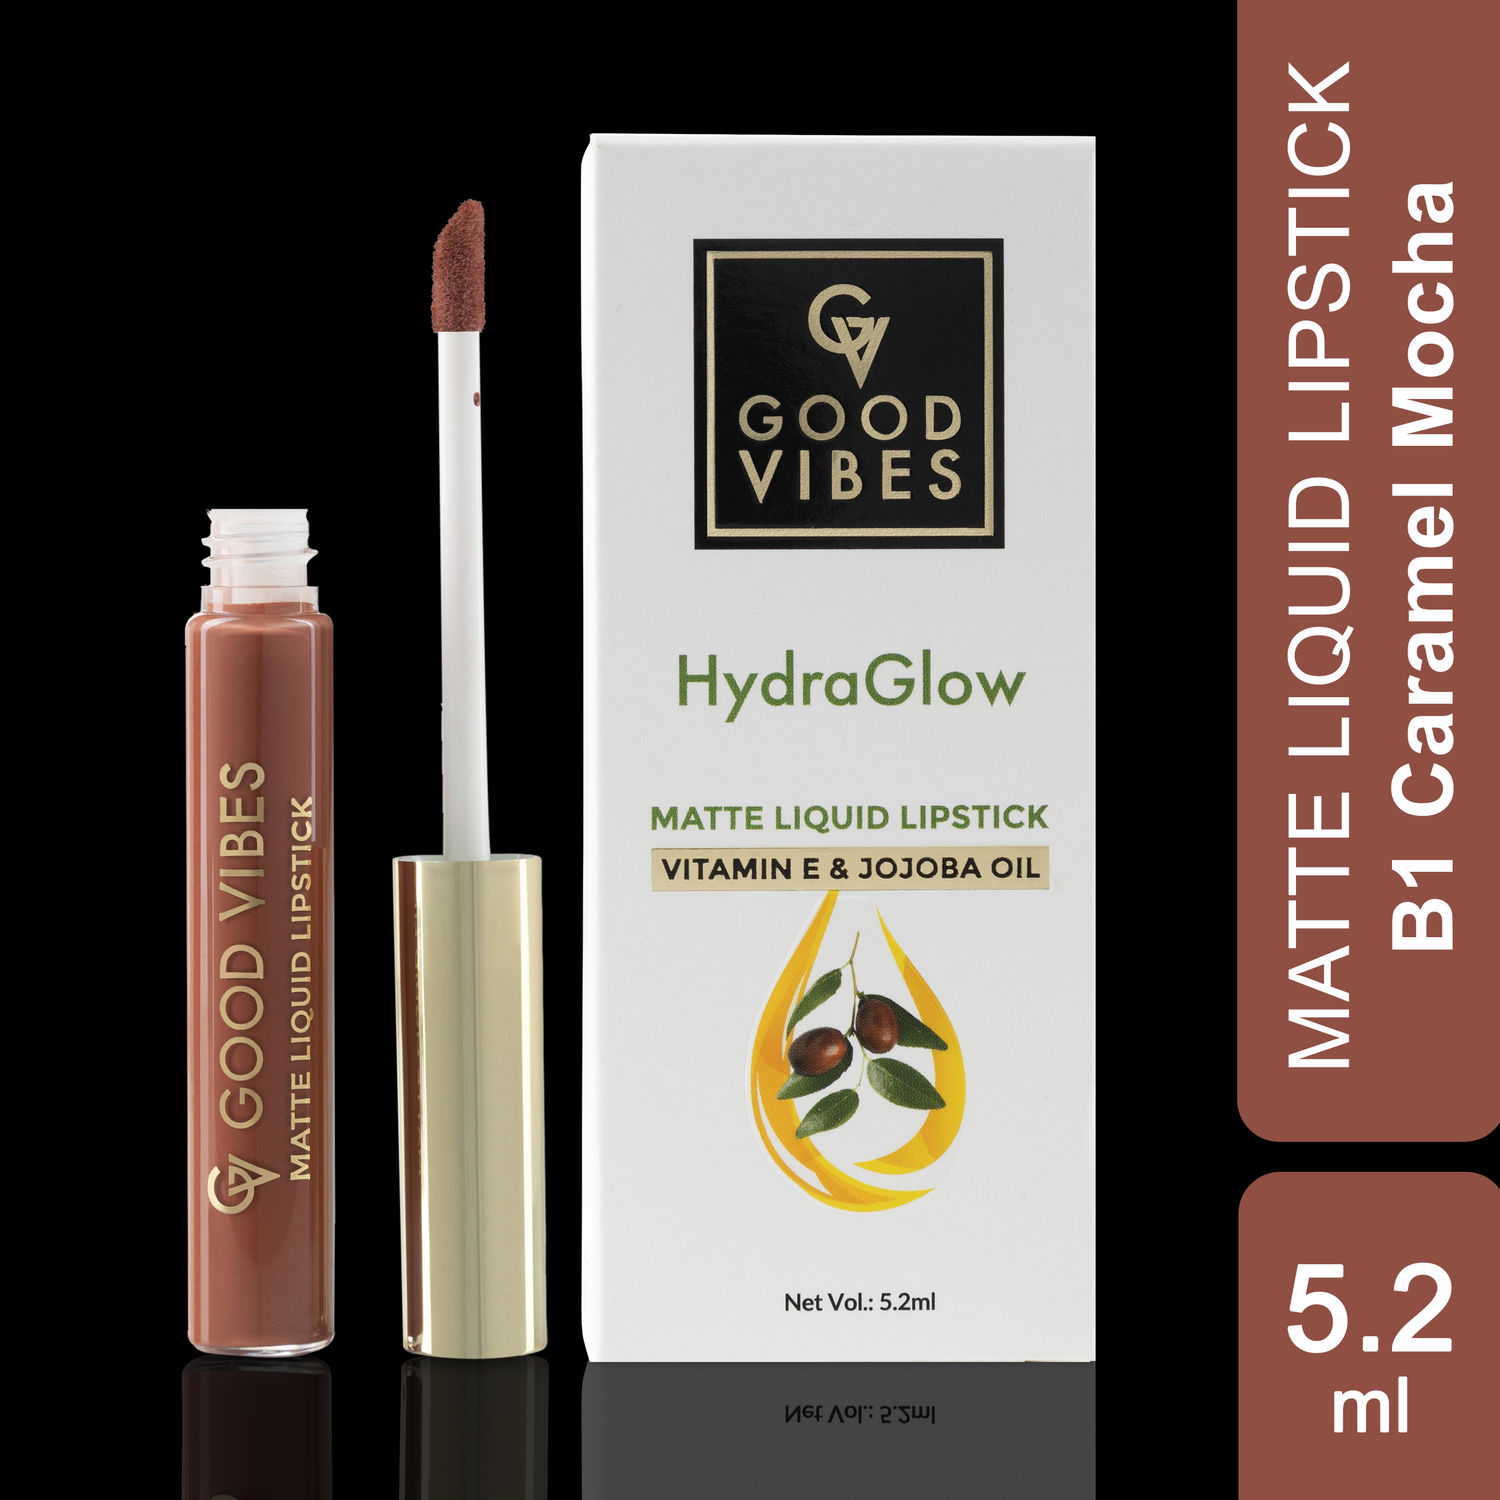 Good Vibes HydraGlow Matte Liquid Lipstick| Jojoba & Vitamin E| Caramel Mocha (B1) - (5.2ml)